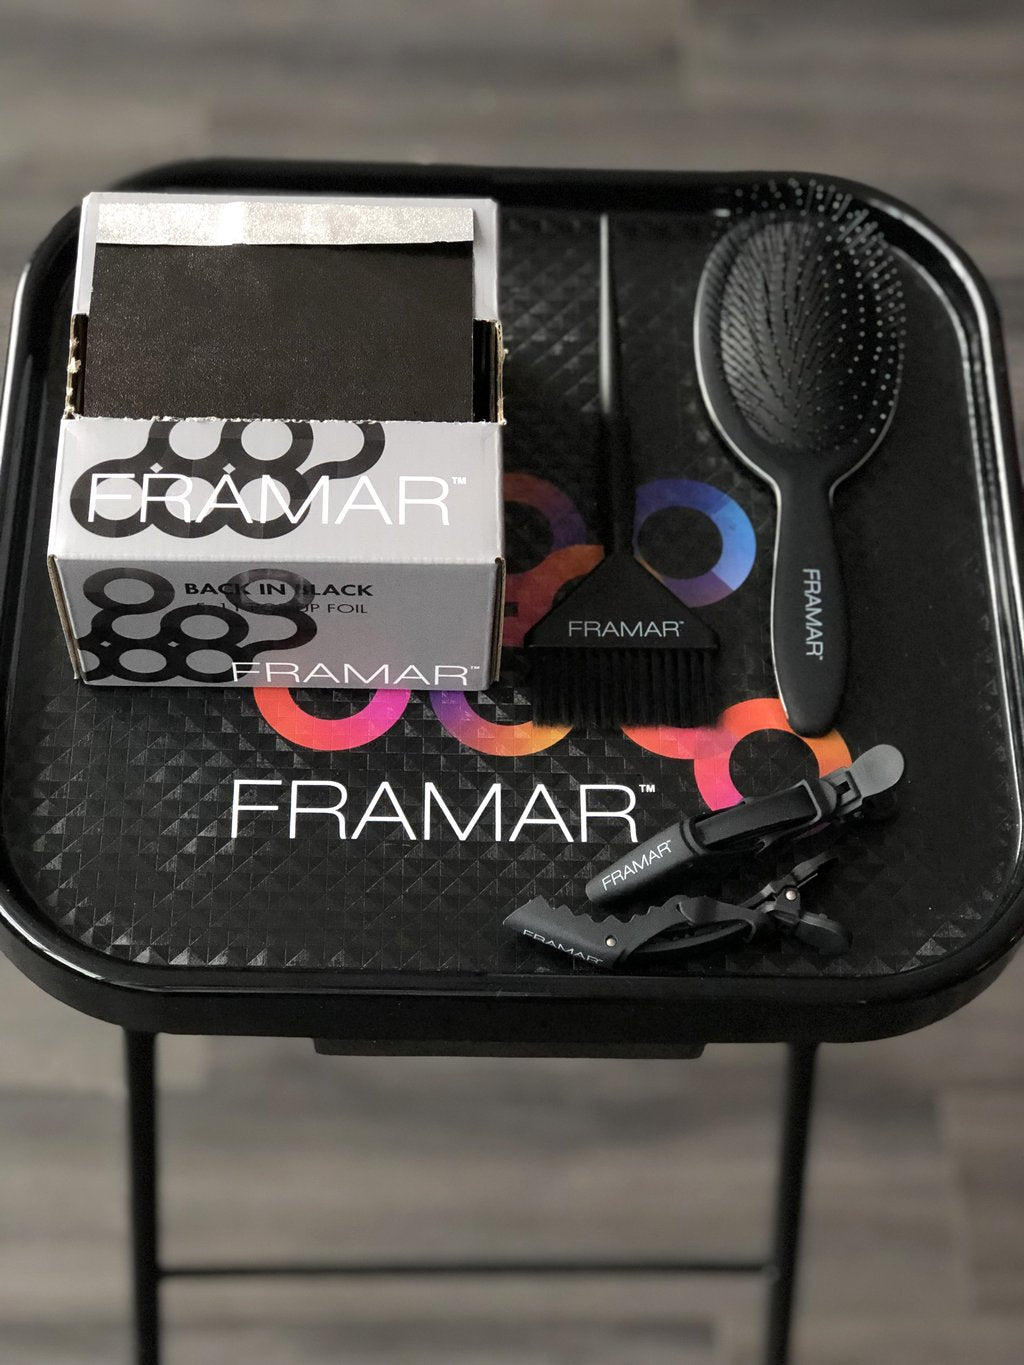 Framar - Folding Trolley - Creata Beauty - Professional Beauty Products